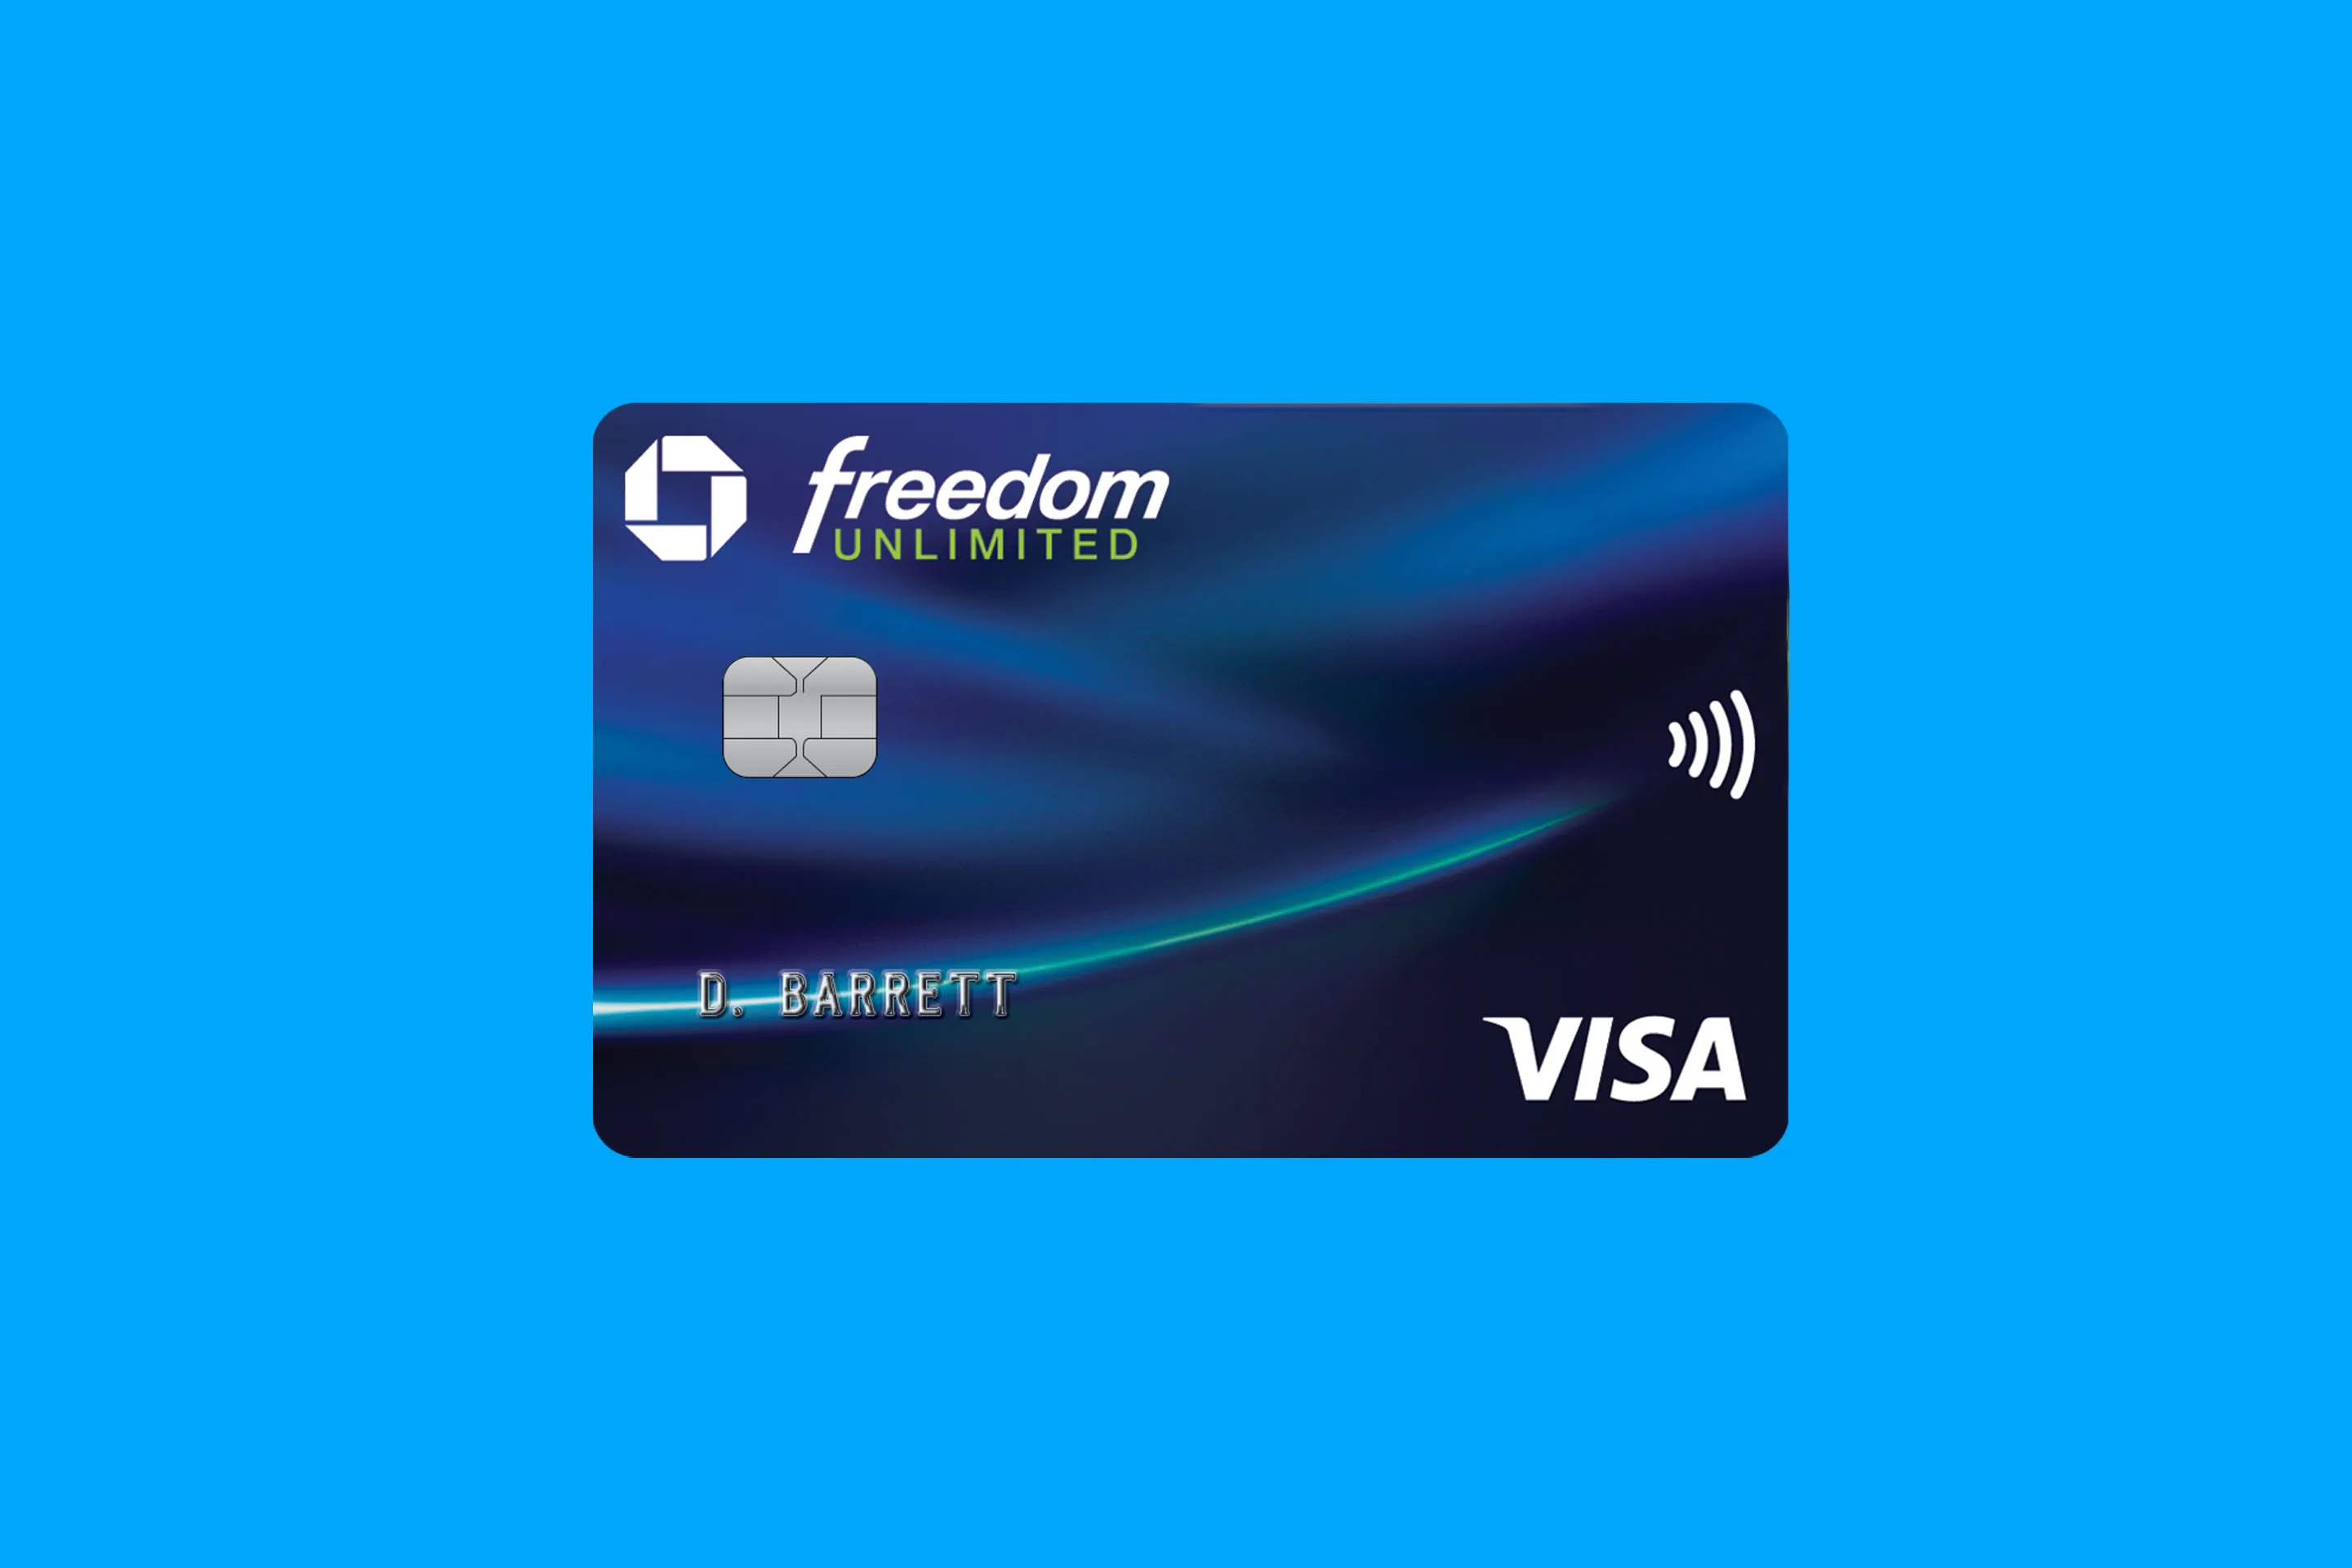 chase freedom card 150 cash back